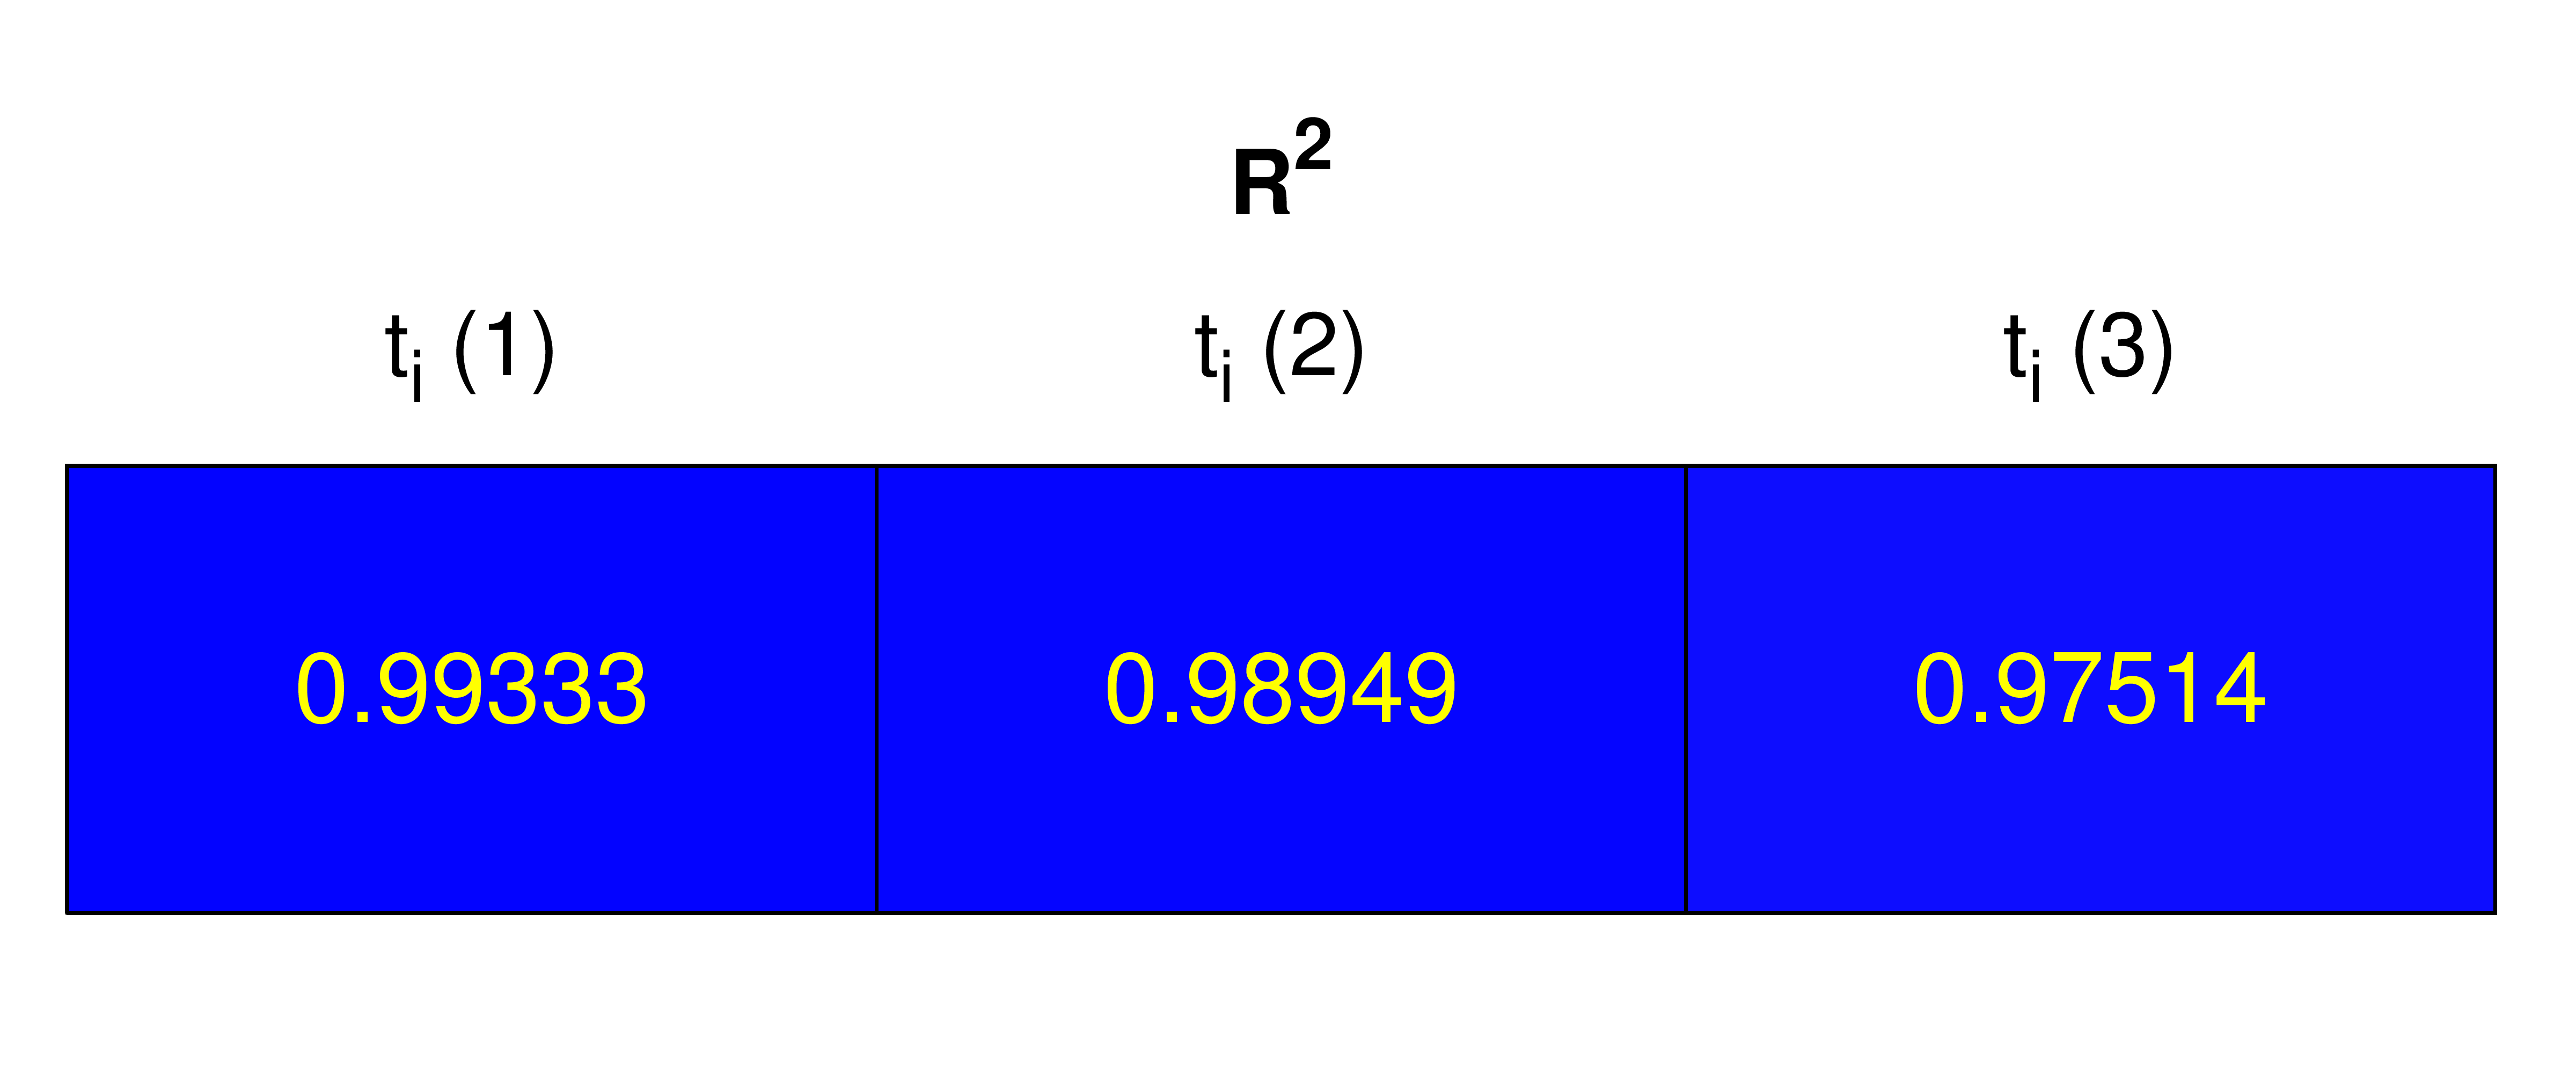 Figure 3. R2 Correlation Coefficients.